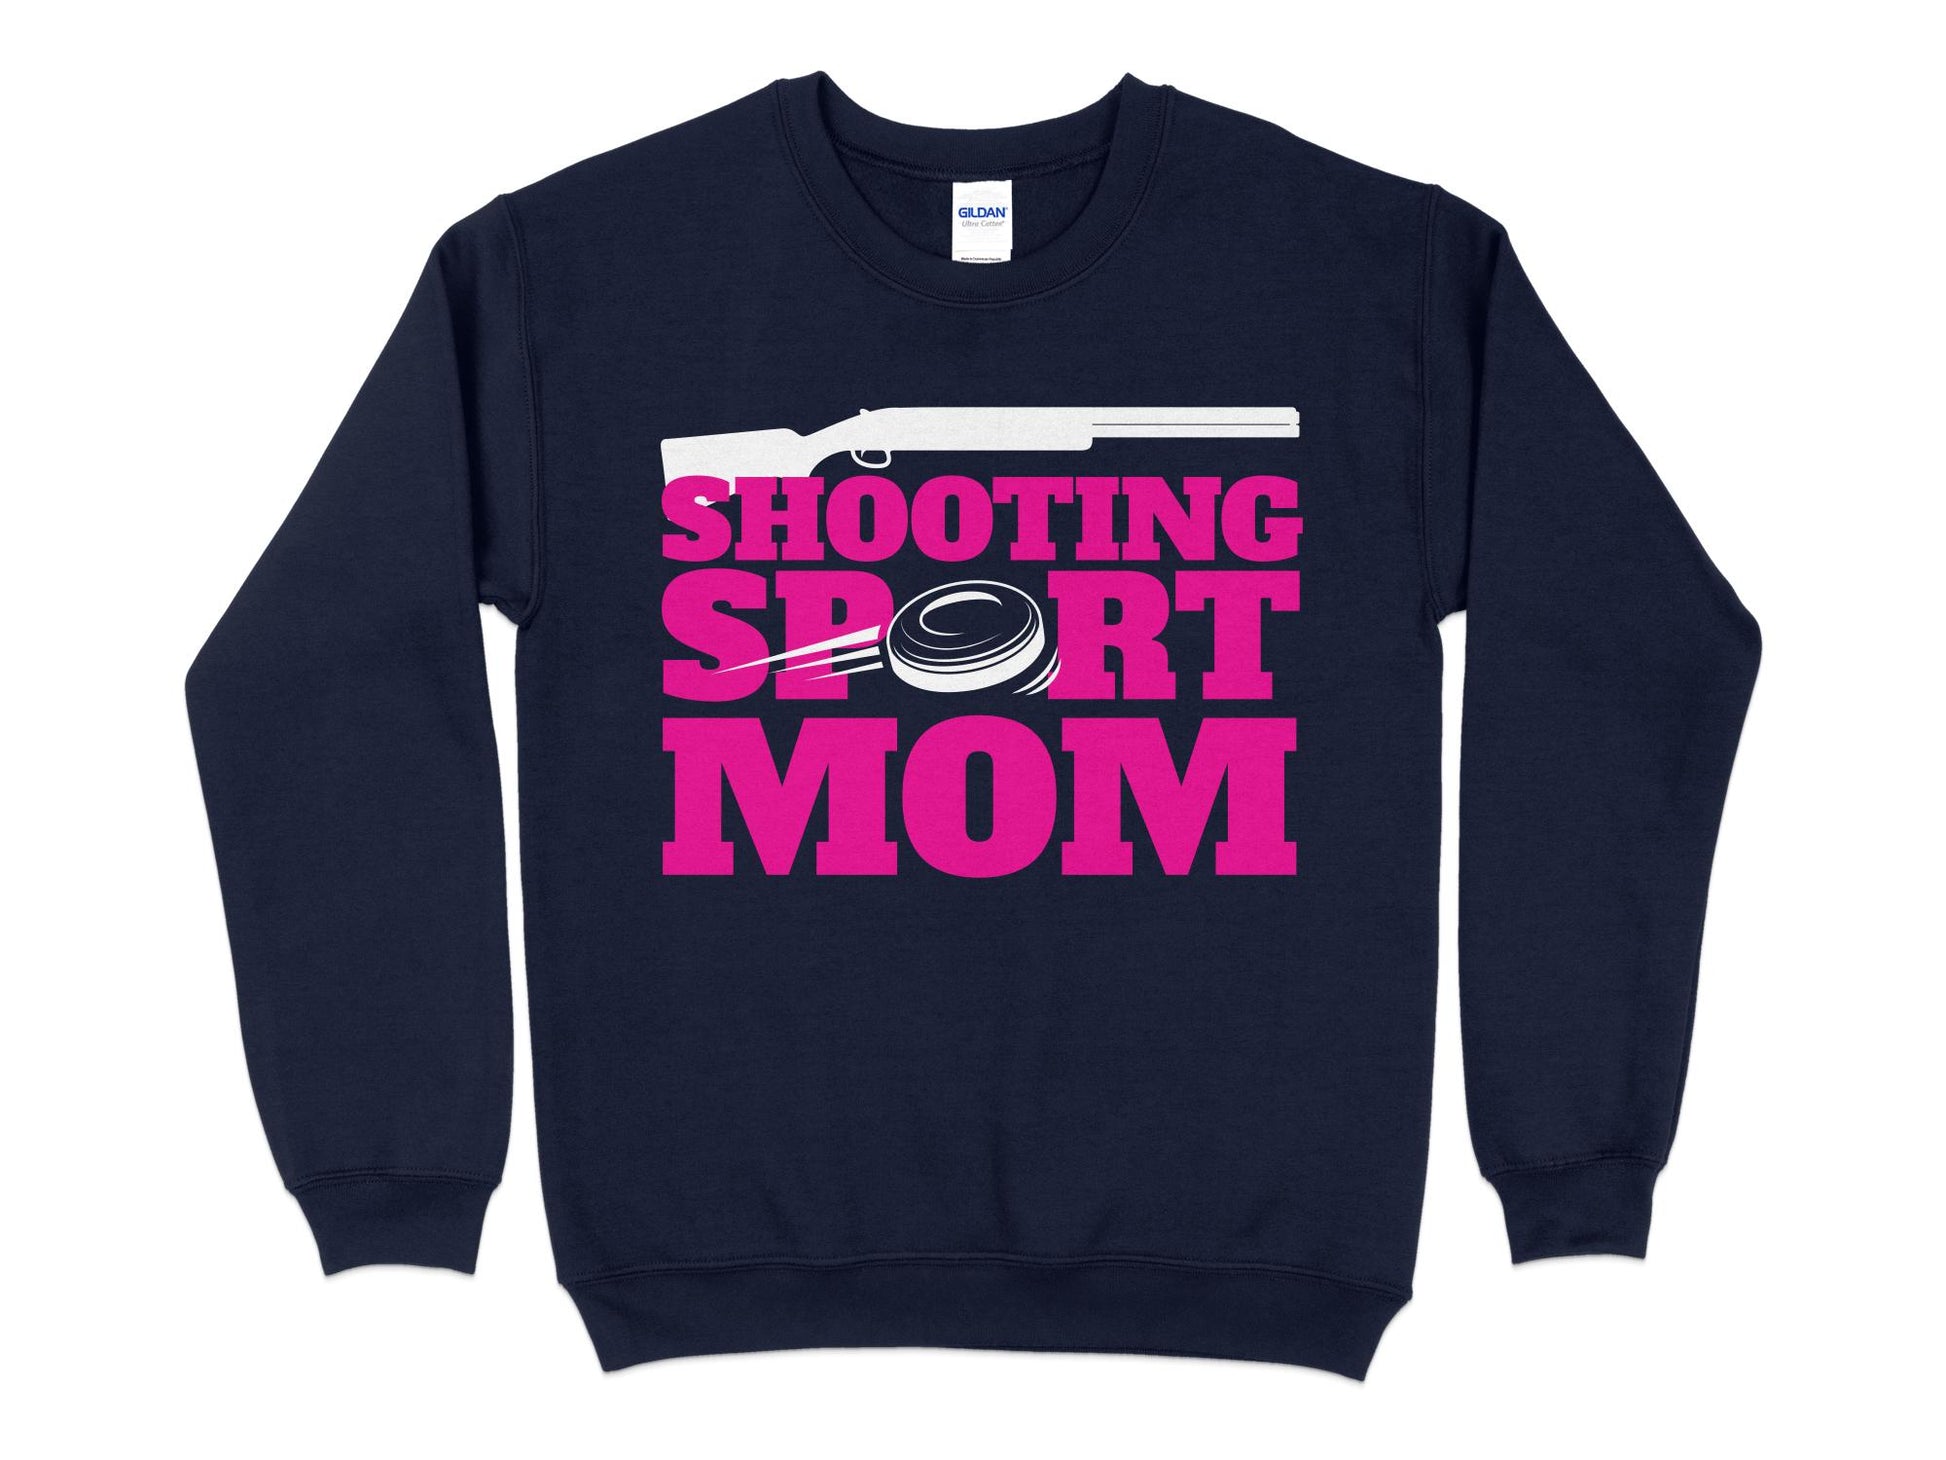 Trap Shooting Sweatshirt for Moms, navy blue